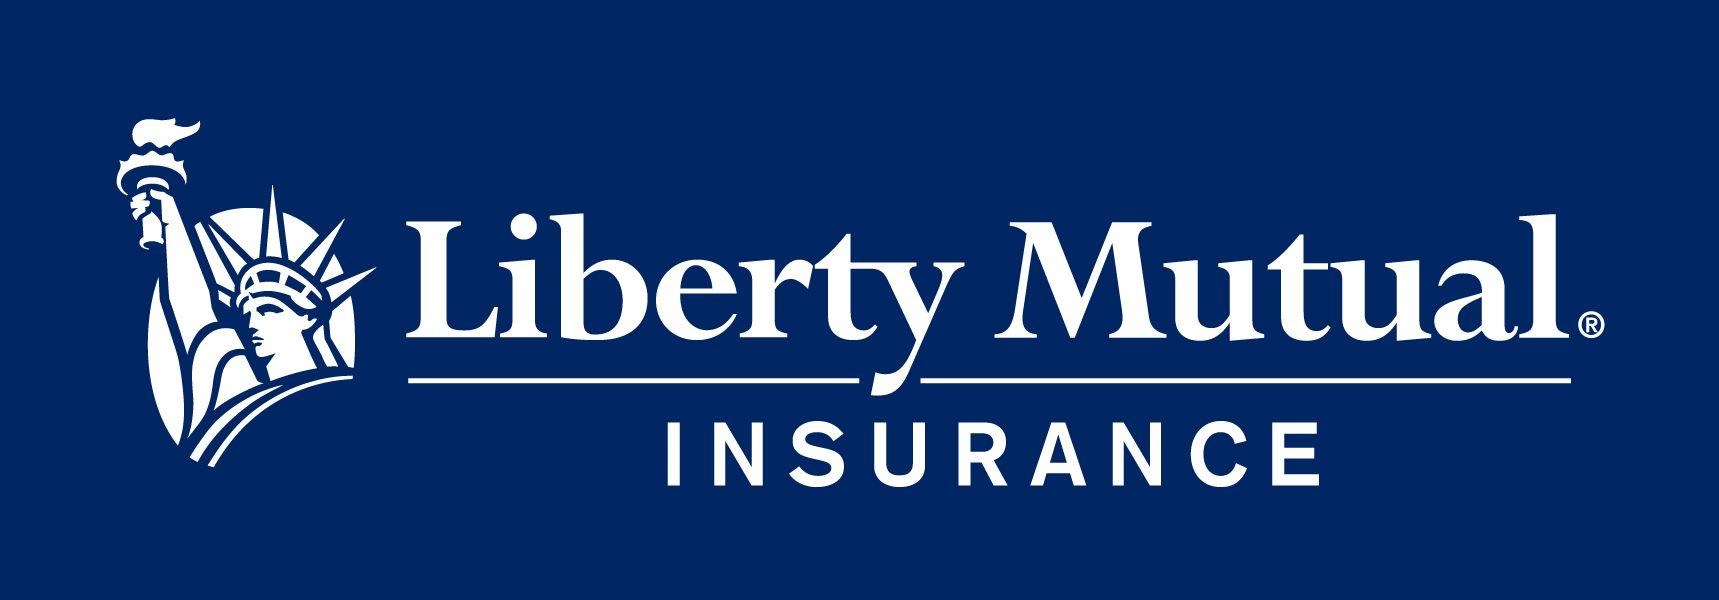 Liberty Mutual Company Logo - Citizens Insurance Agency - Companies We Represent